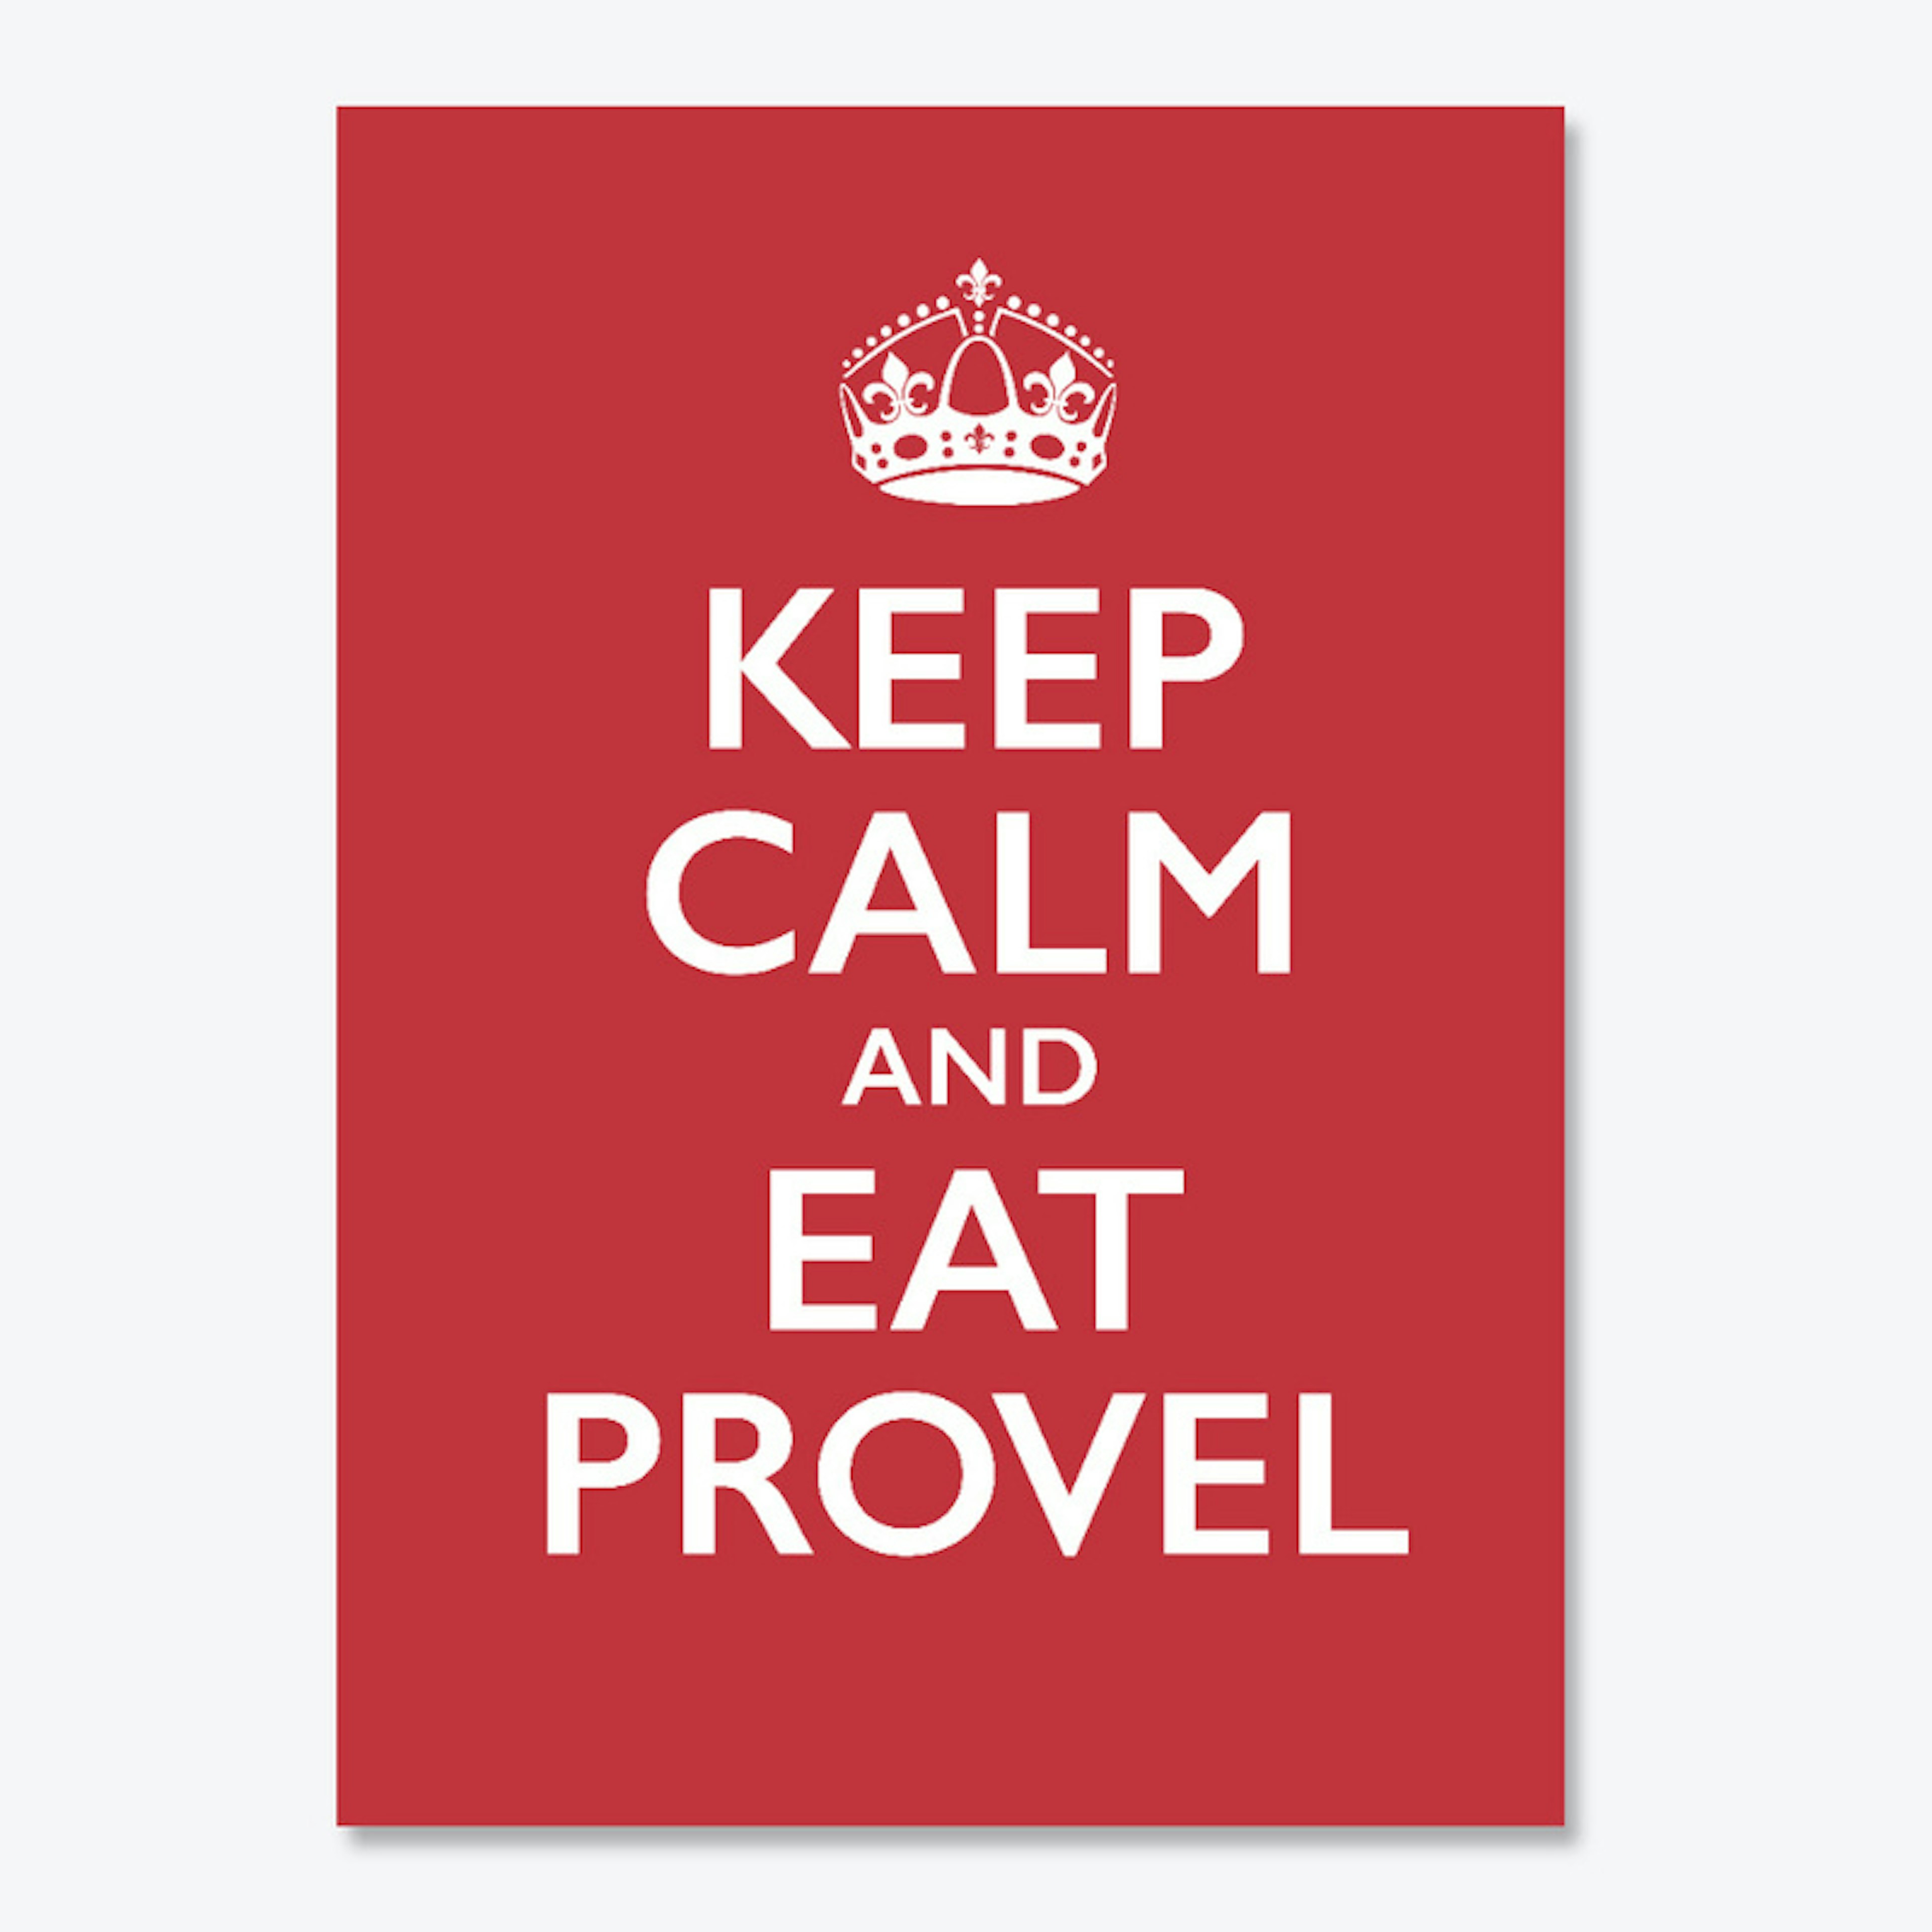 Keep Calm and Eat Provel